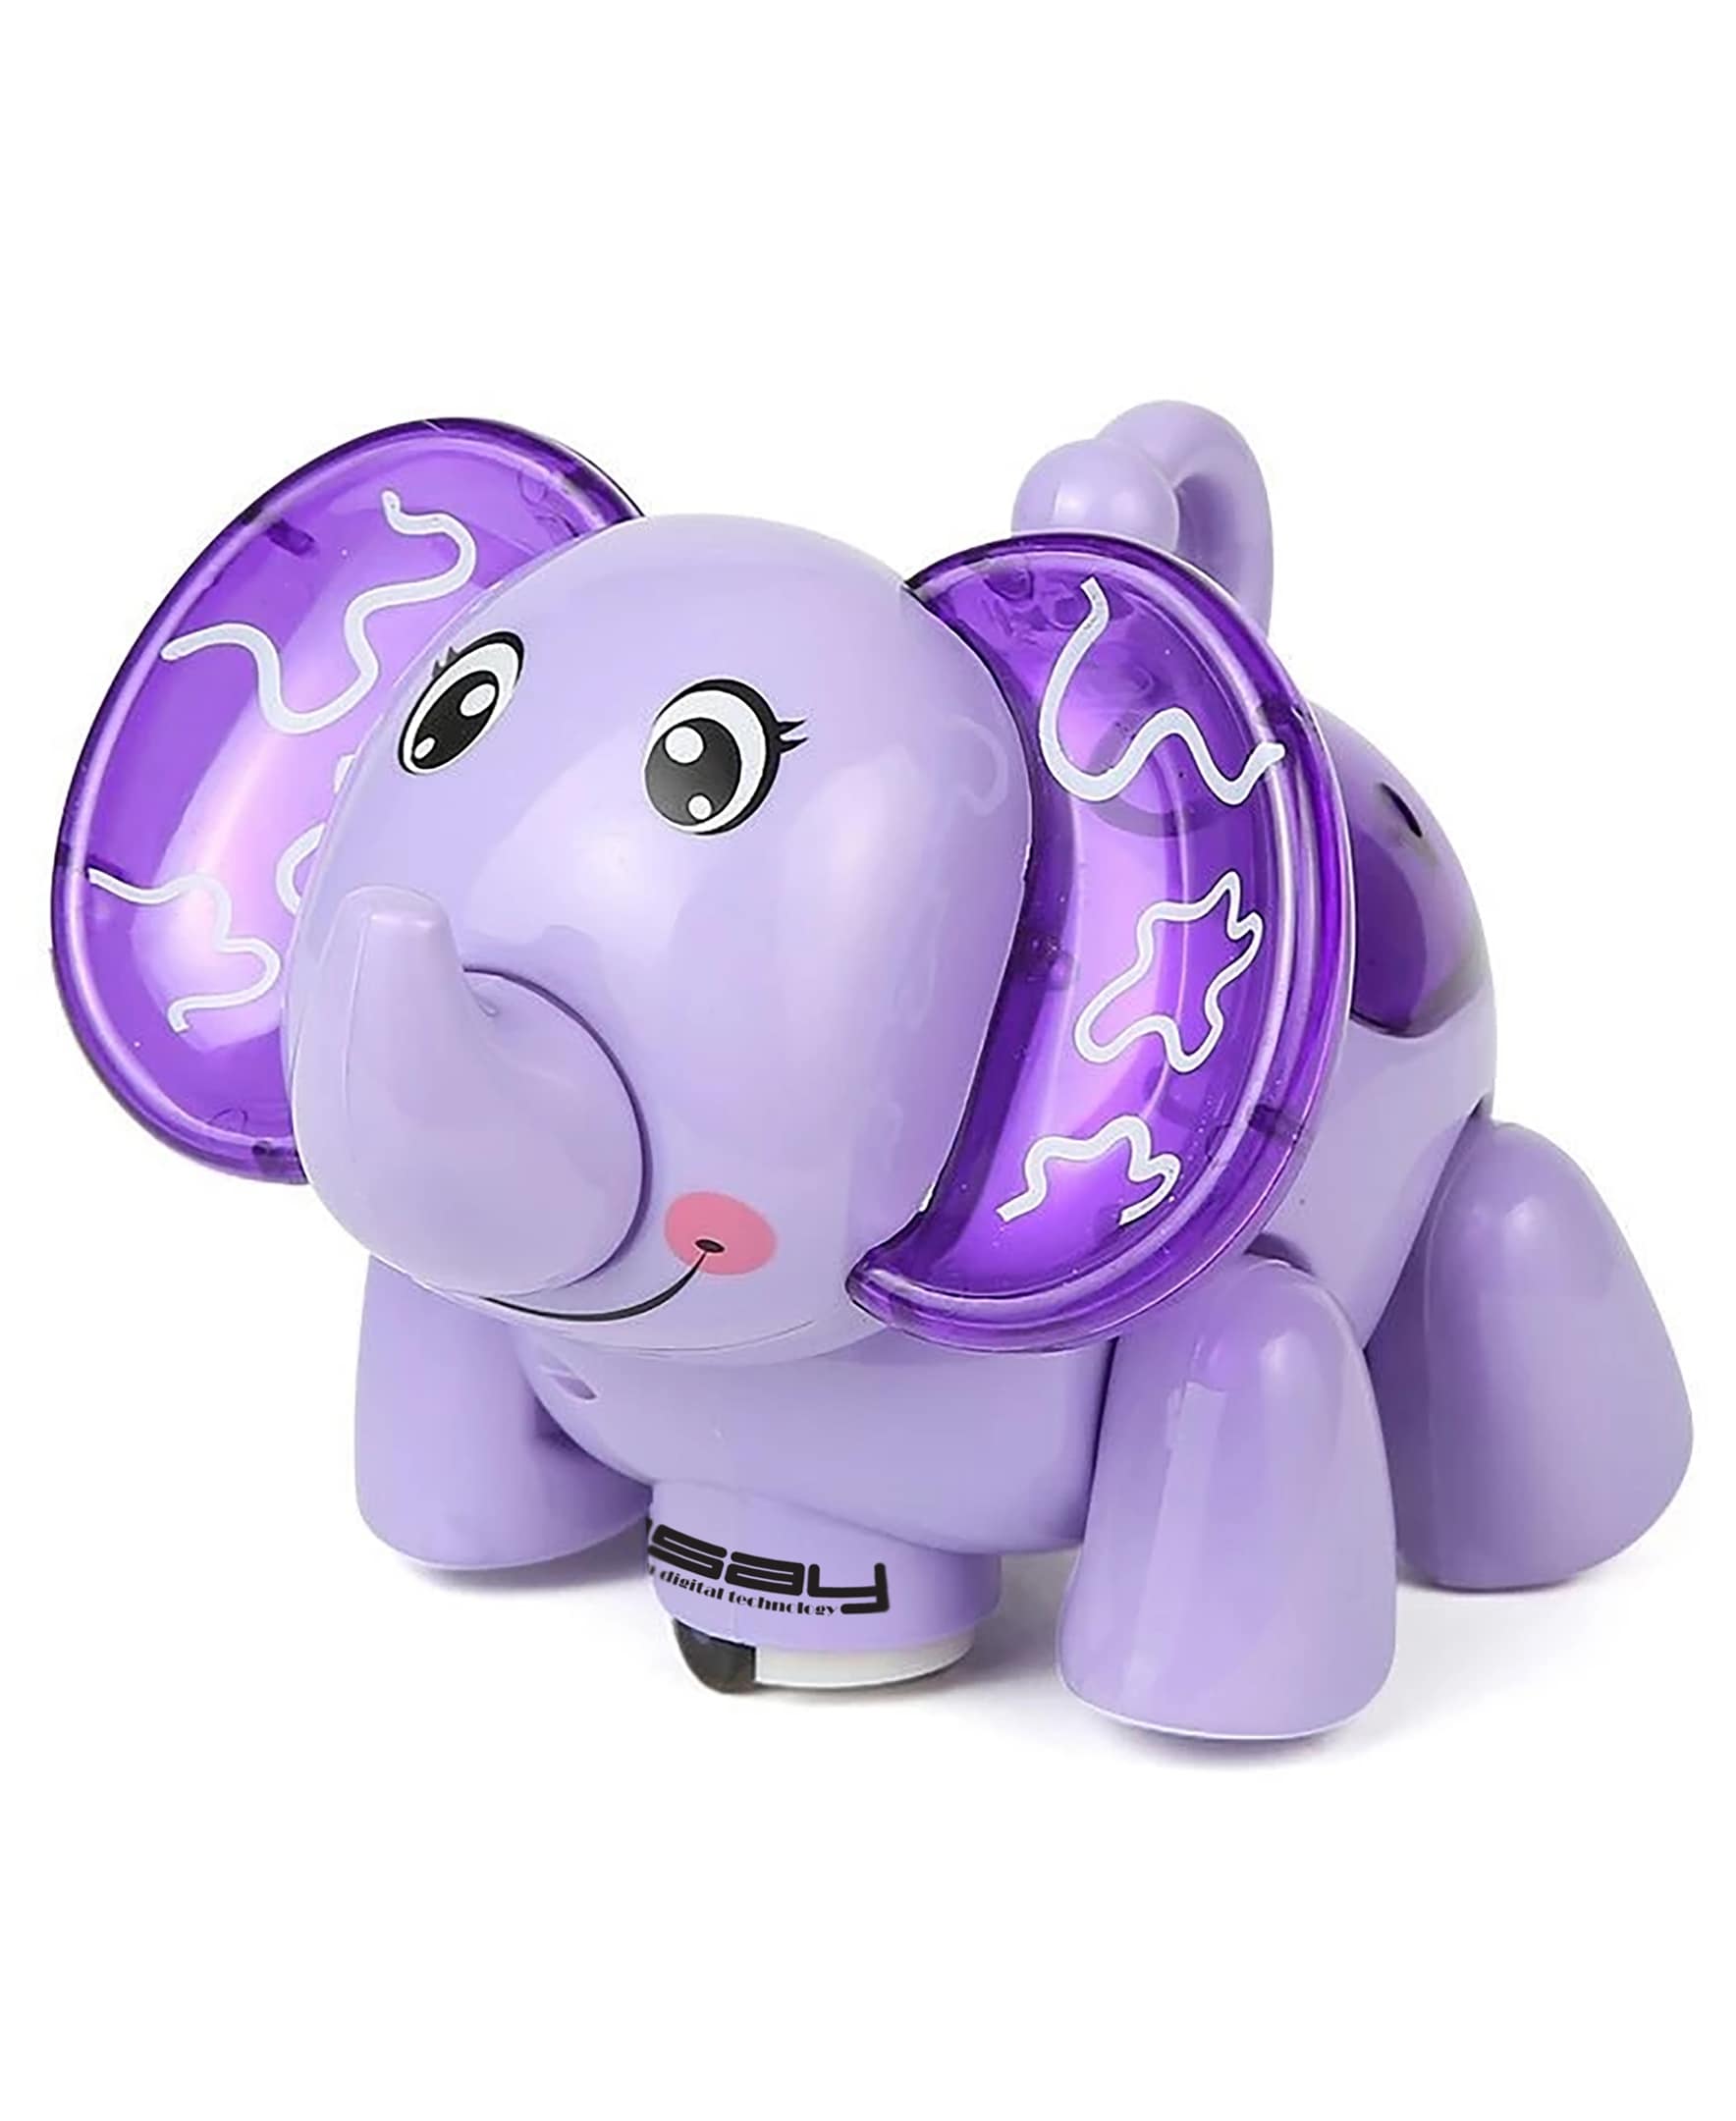 LINSAY Baby Kids Smart Toy LED Light - Purple Elephant A1LP - The Home Depot